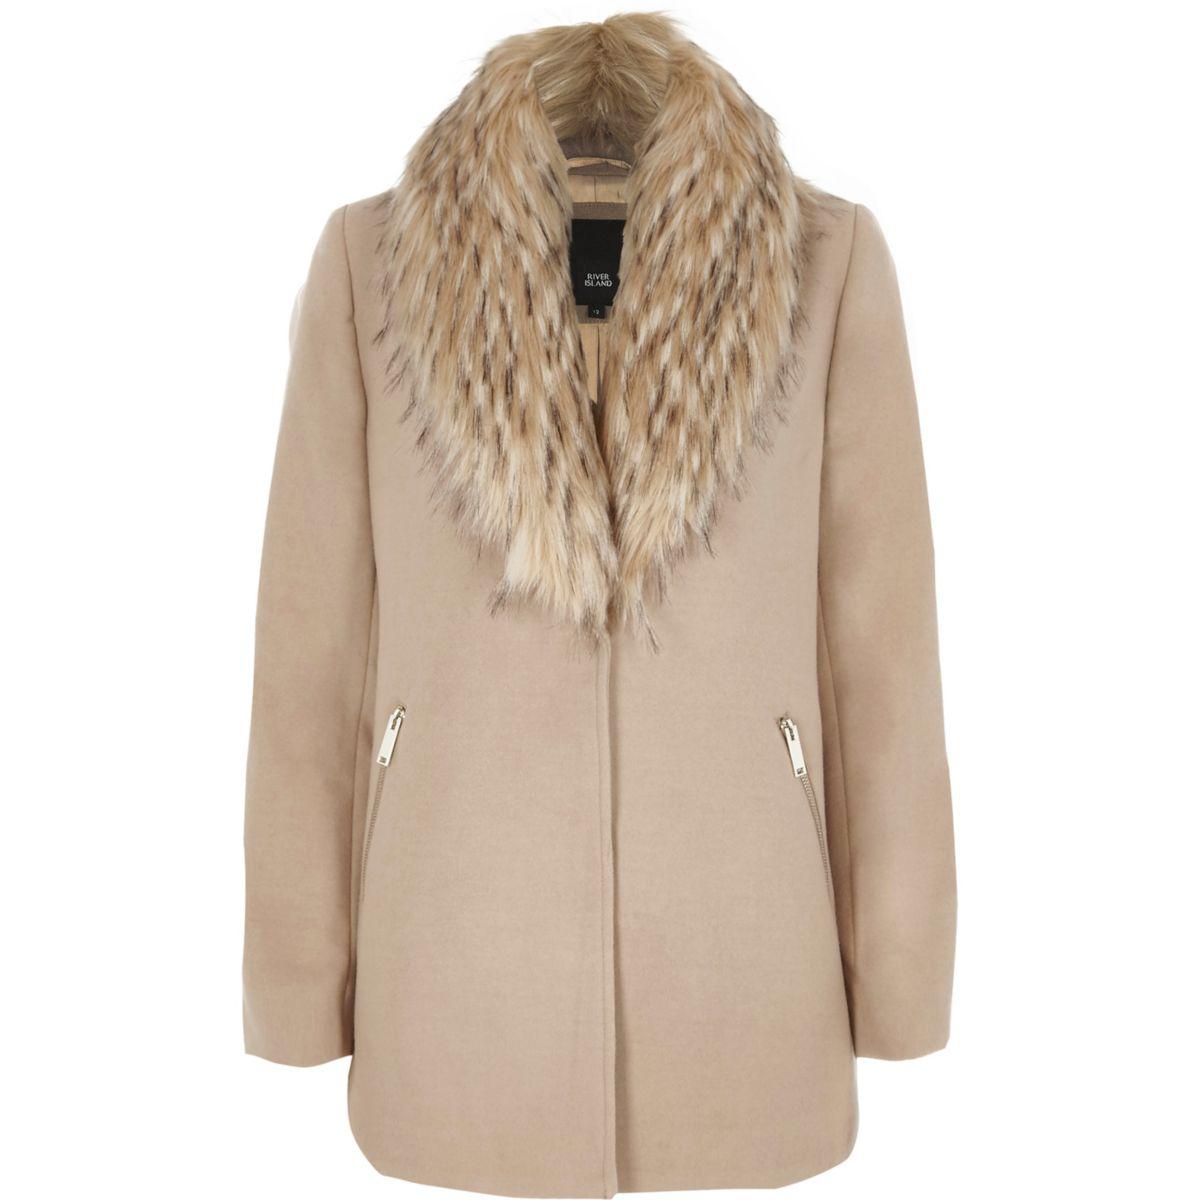 Camel Faux Fur Collar Boyfriend Coat / The camel coat is a real classic ...